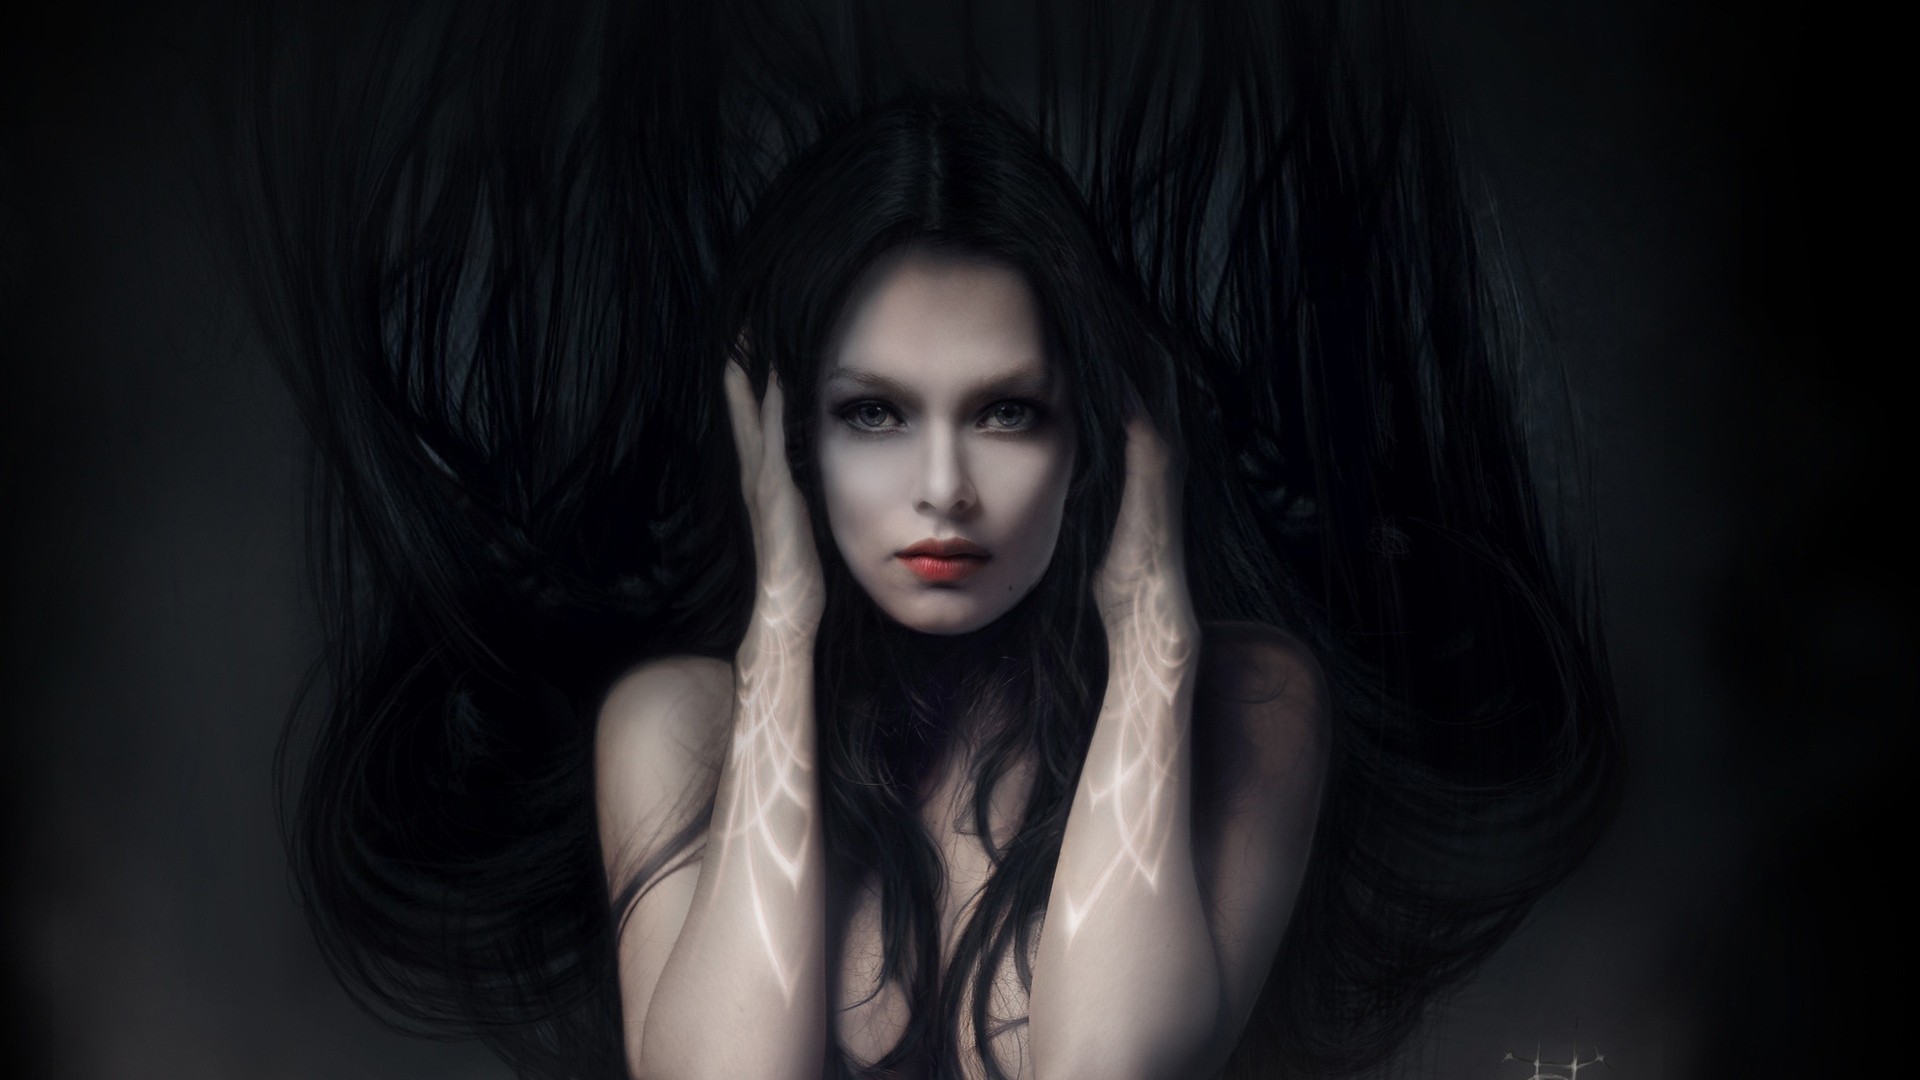 General 1920x1080 women fantasy art fantasy girl dark hair artwork looking at viewer black hair long hair red lipstick face